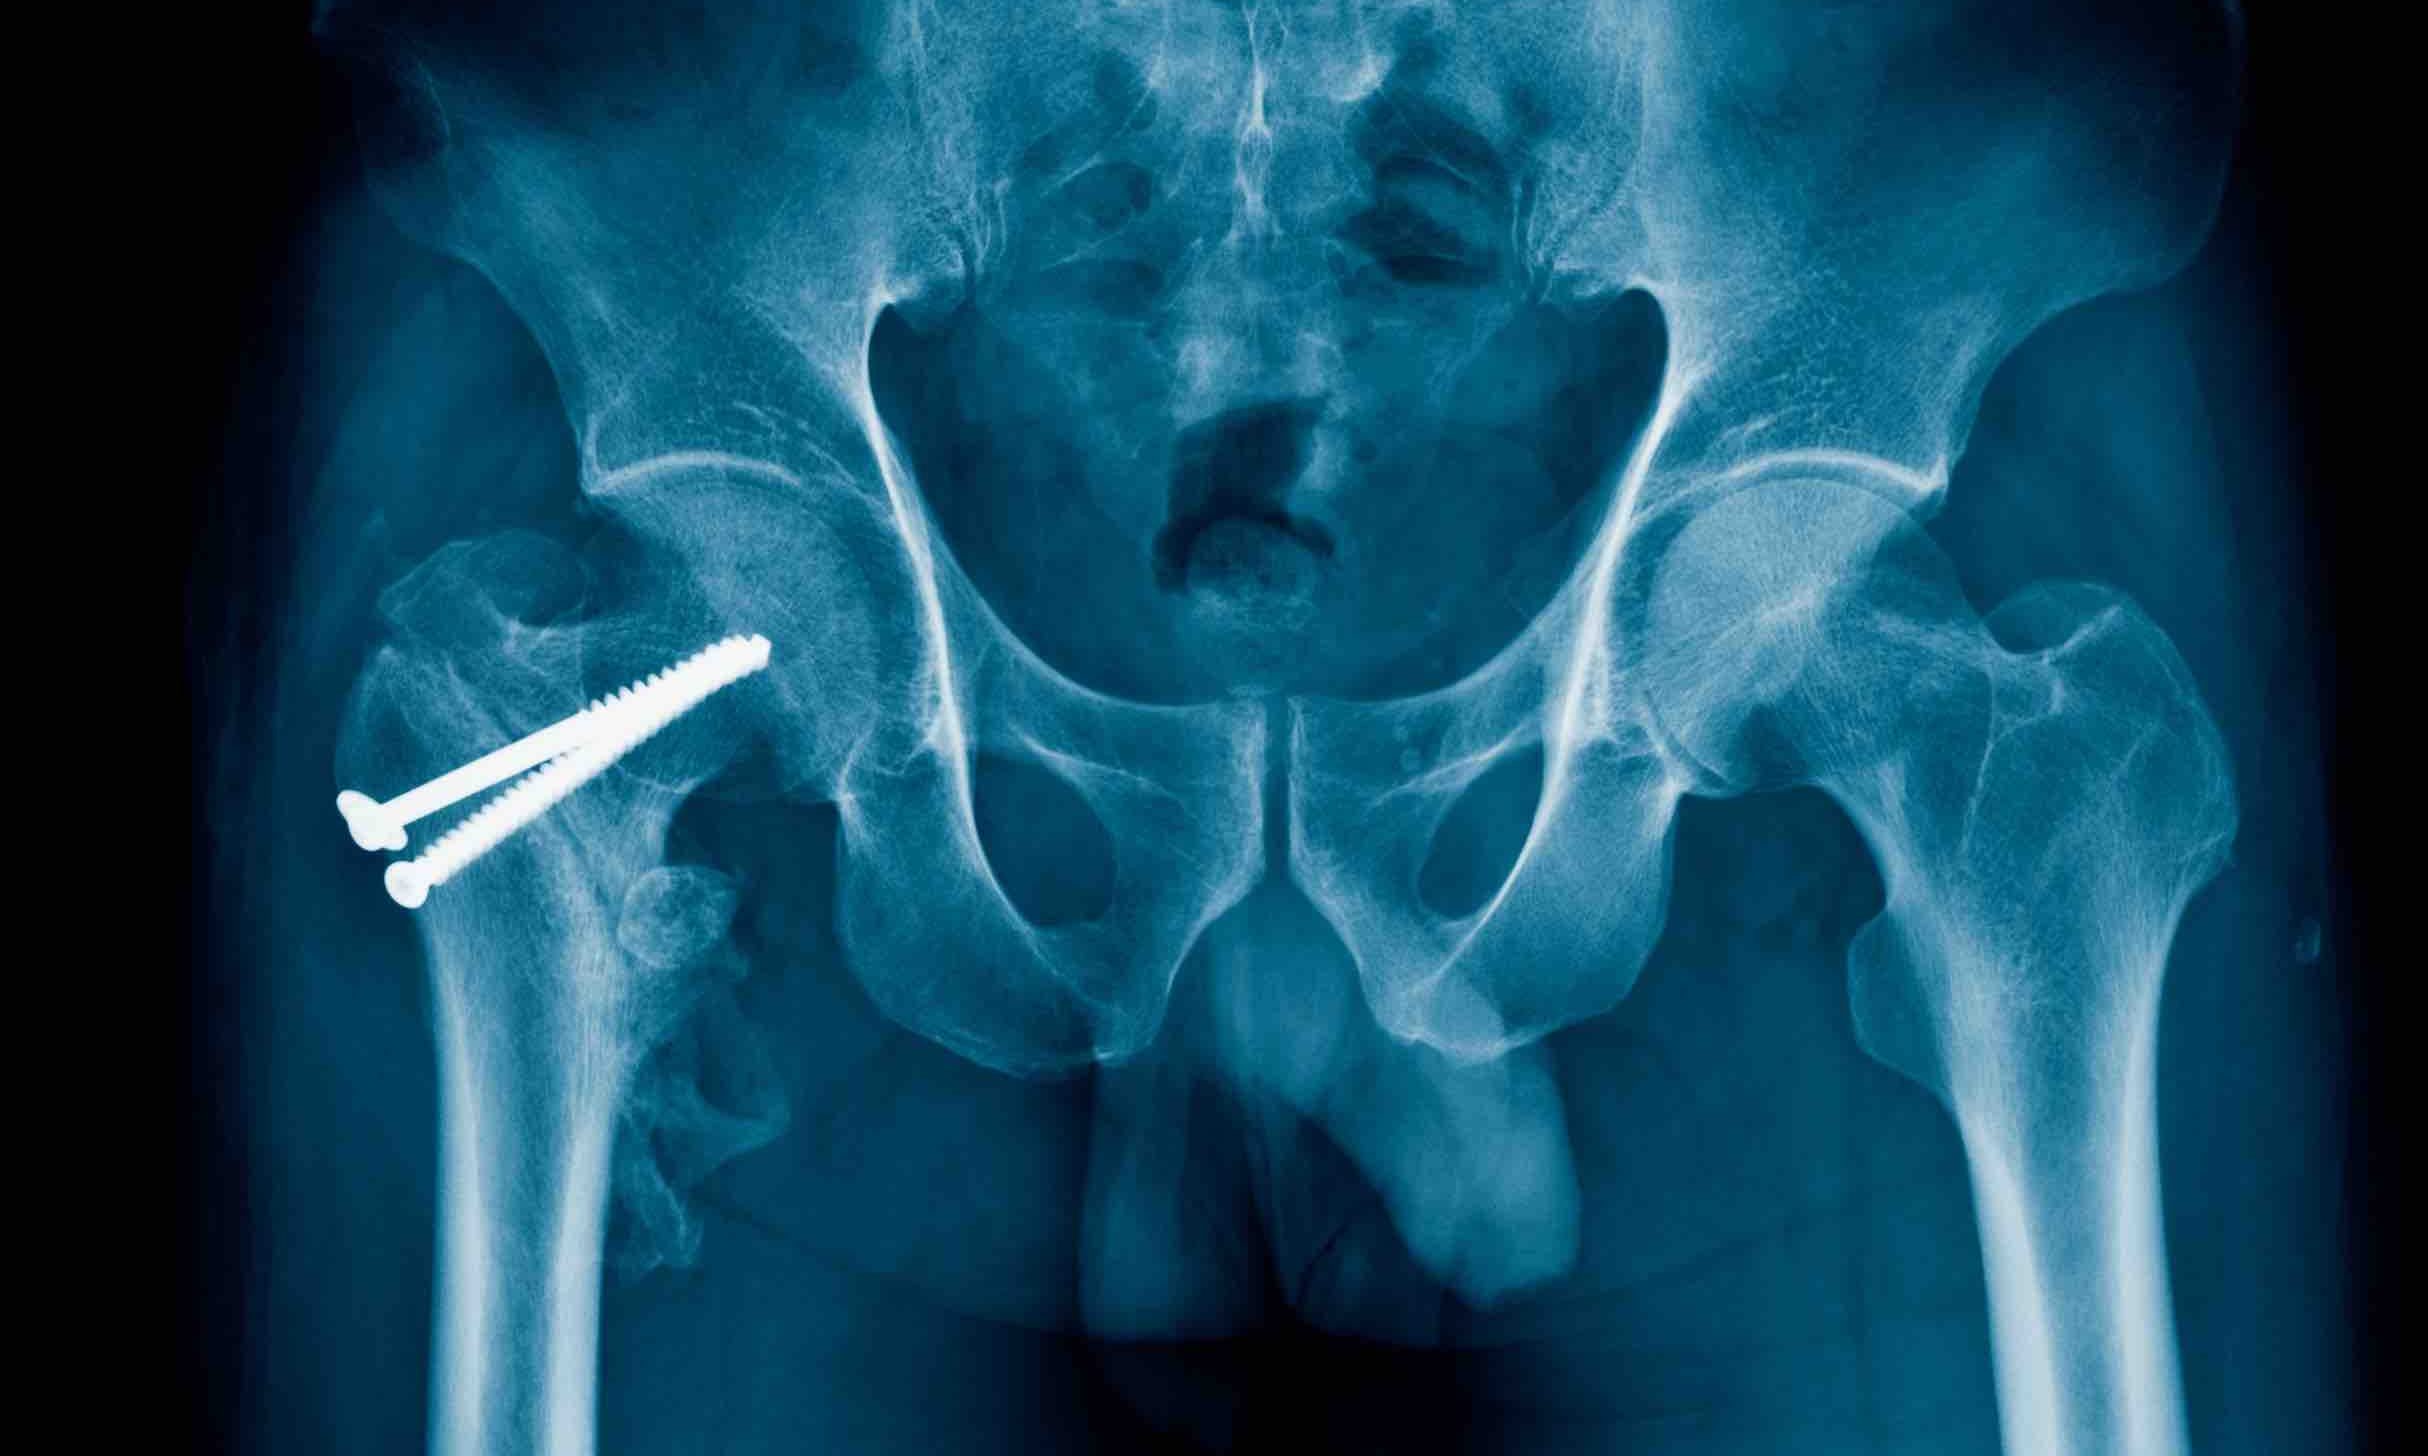 hip fracture repair